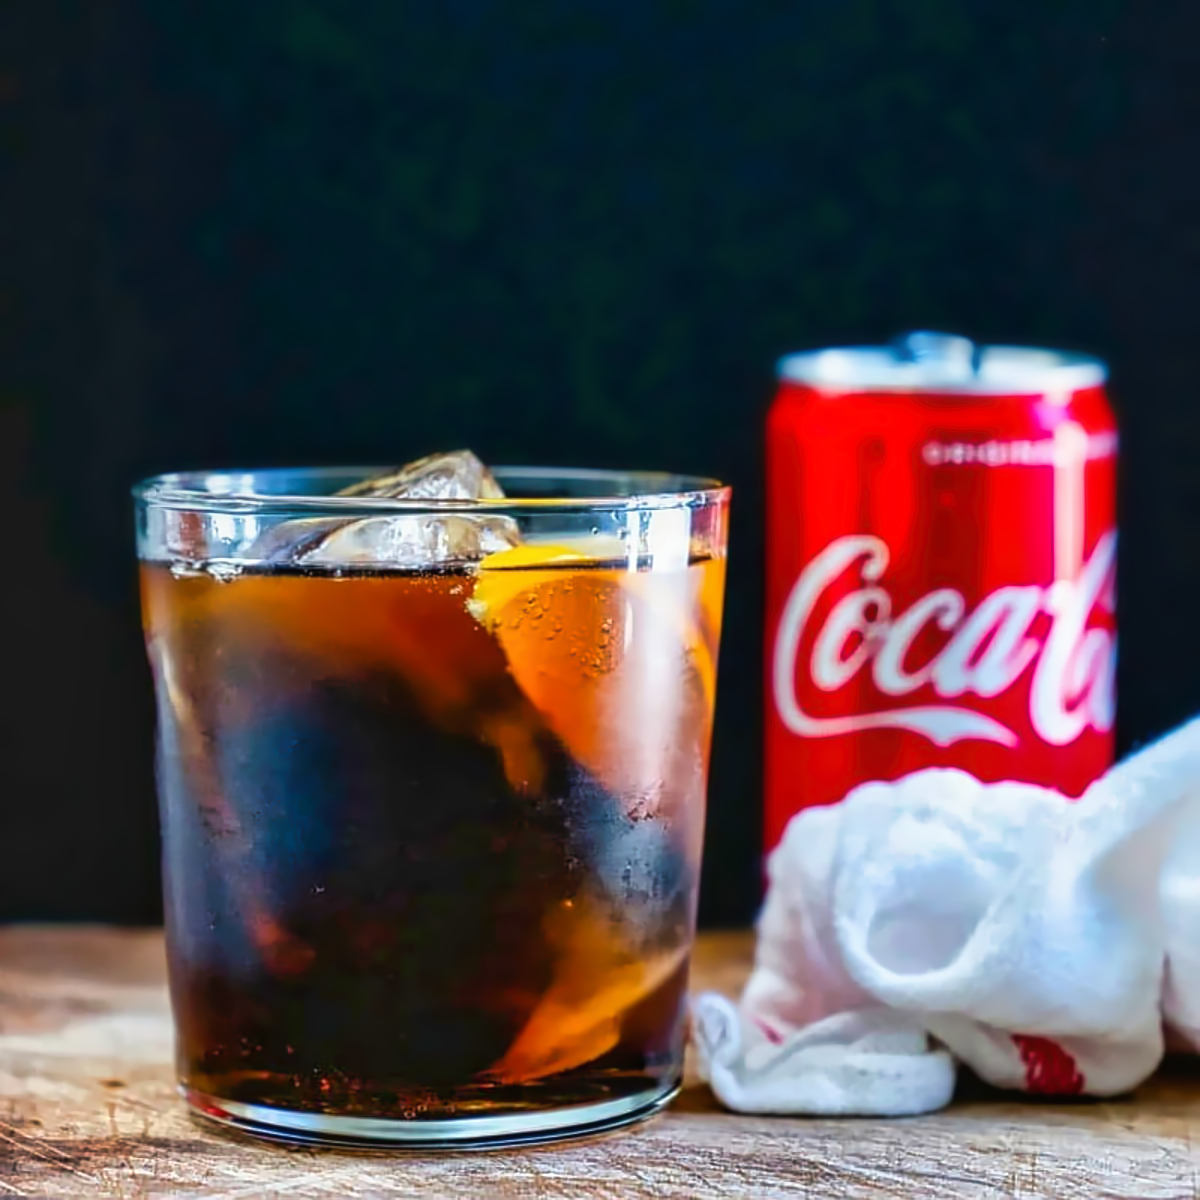 3. Jack and Coke - Jack Daniels bonded whiskey